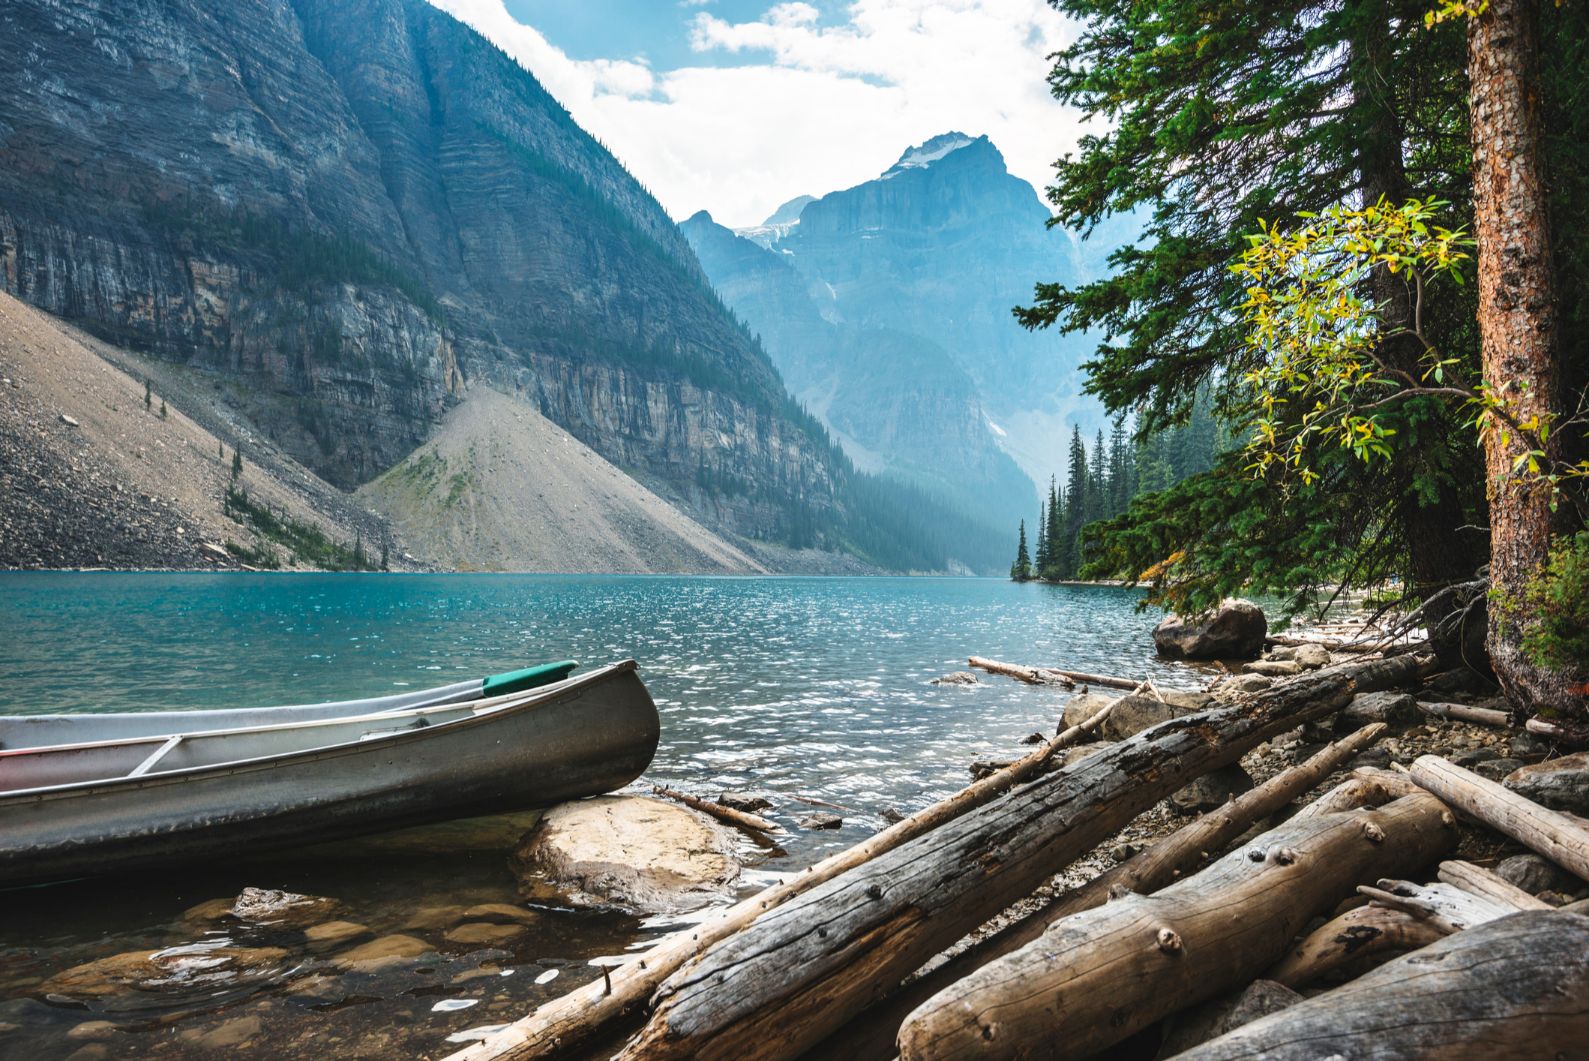 Canoe in beautiful natural surroundings